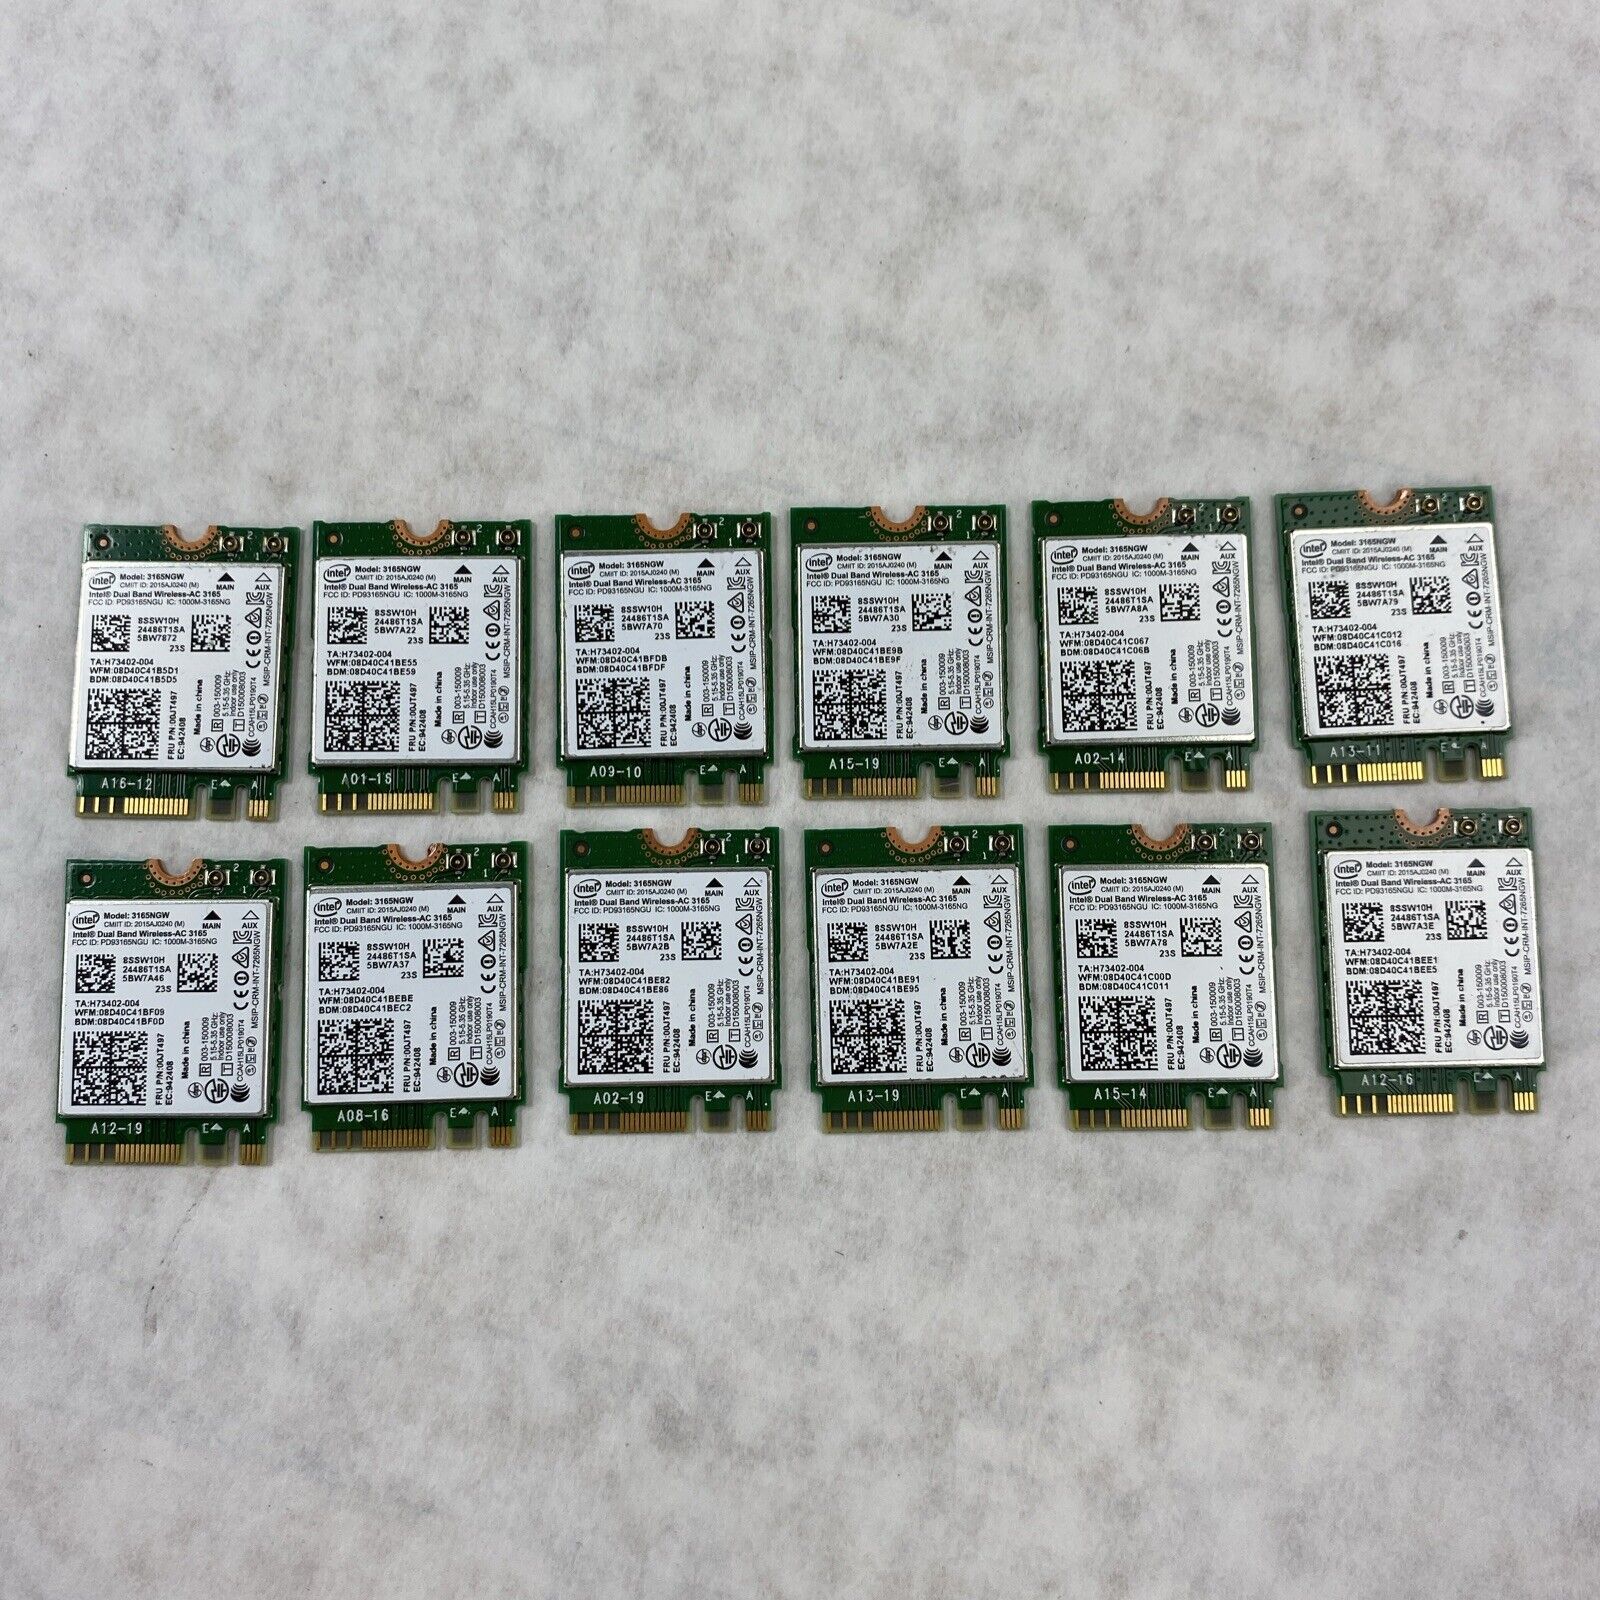 Lot of 12 Intel 3165NGW Dual Band Wireless-AC 3165 WIFI Card